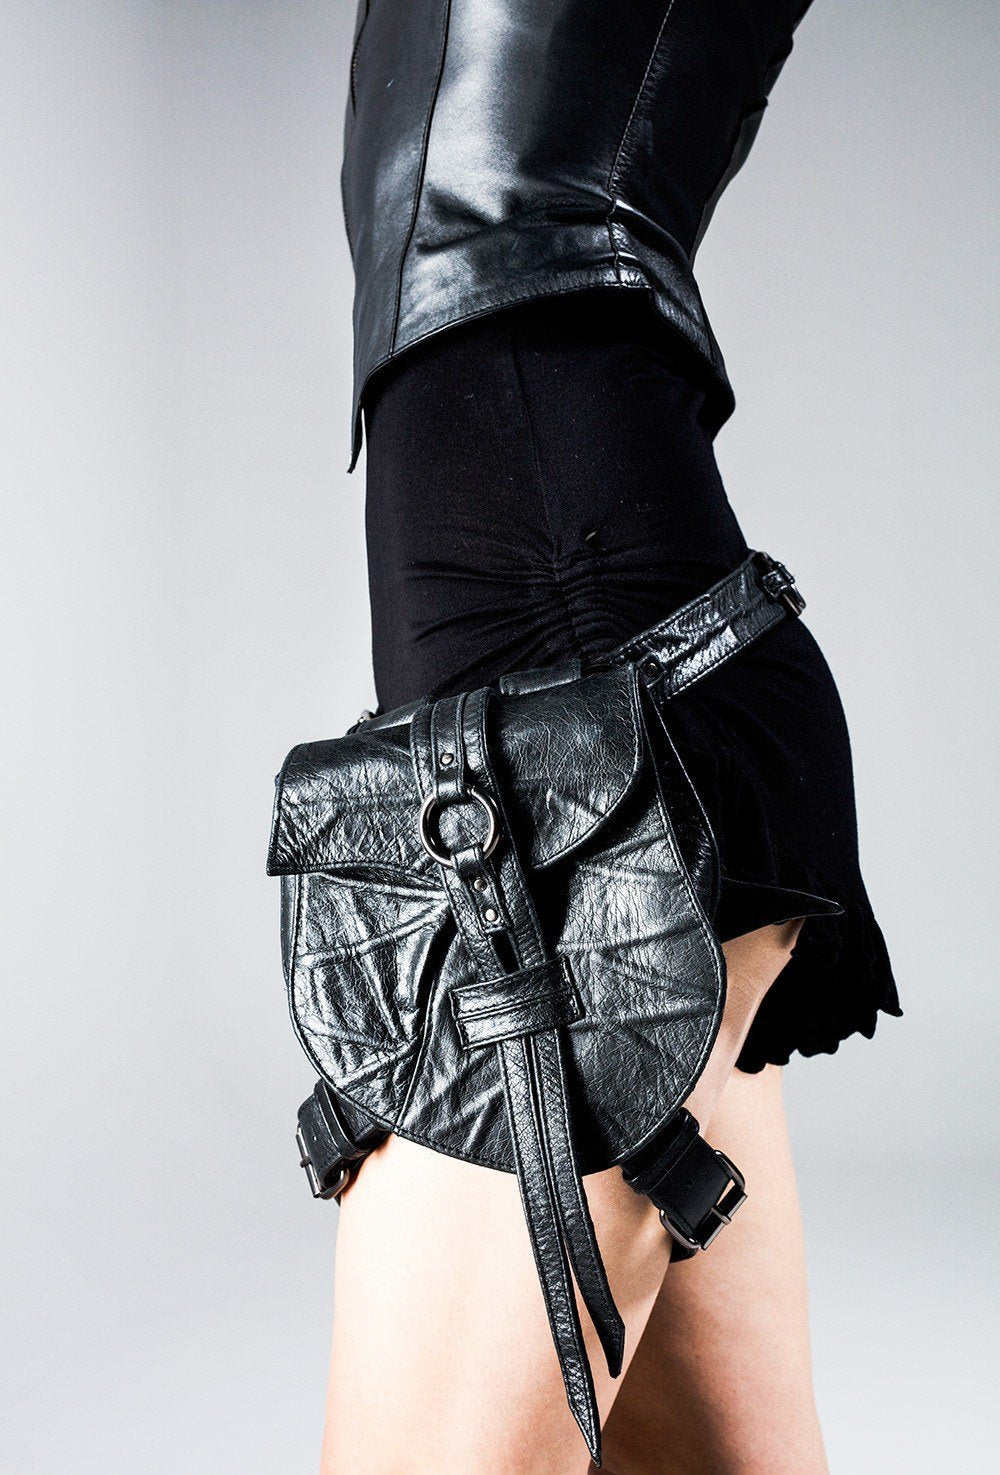 Leather Side Bag - Buy Leather Shoulder Bag From Online Store in BD - RAVEN